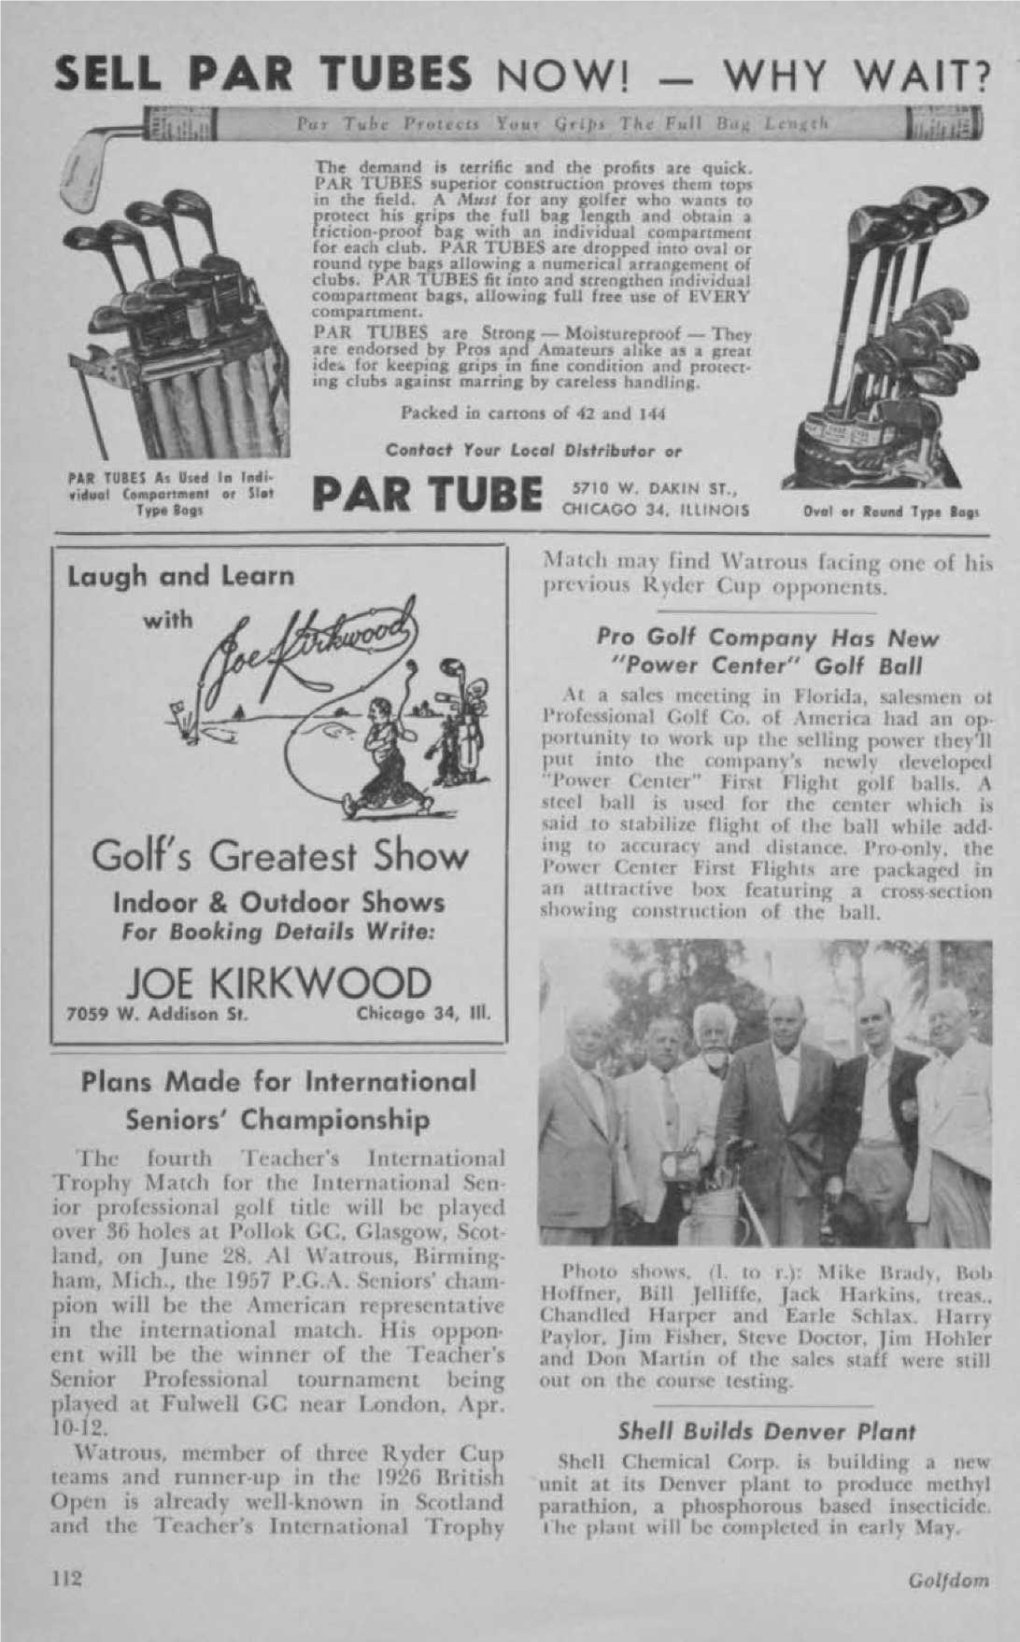 Golf's Greatest Show JOE KIRKWOOD